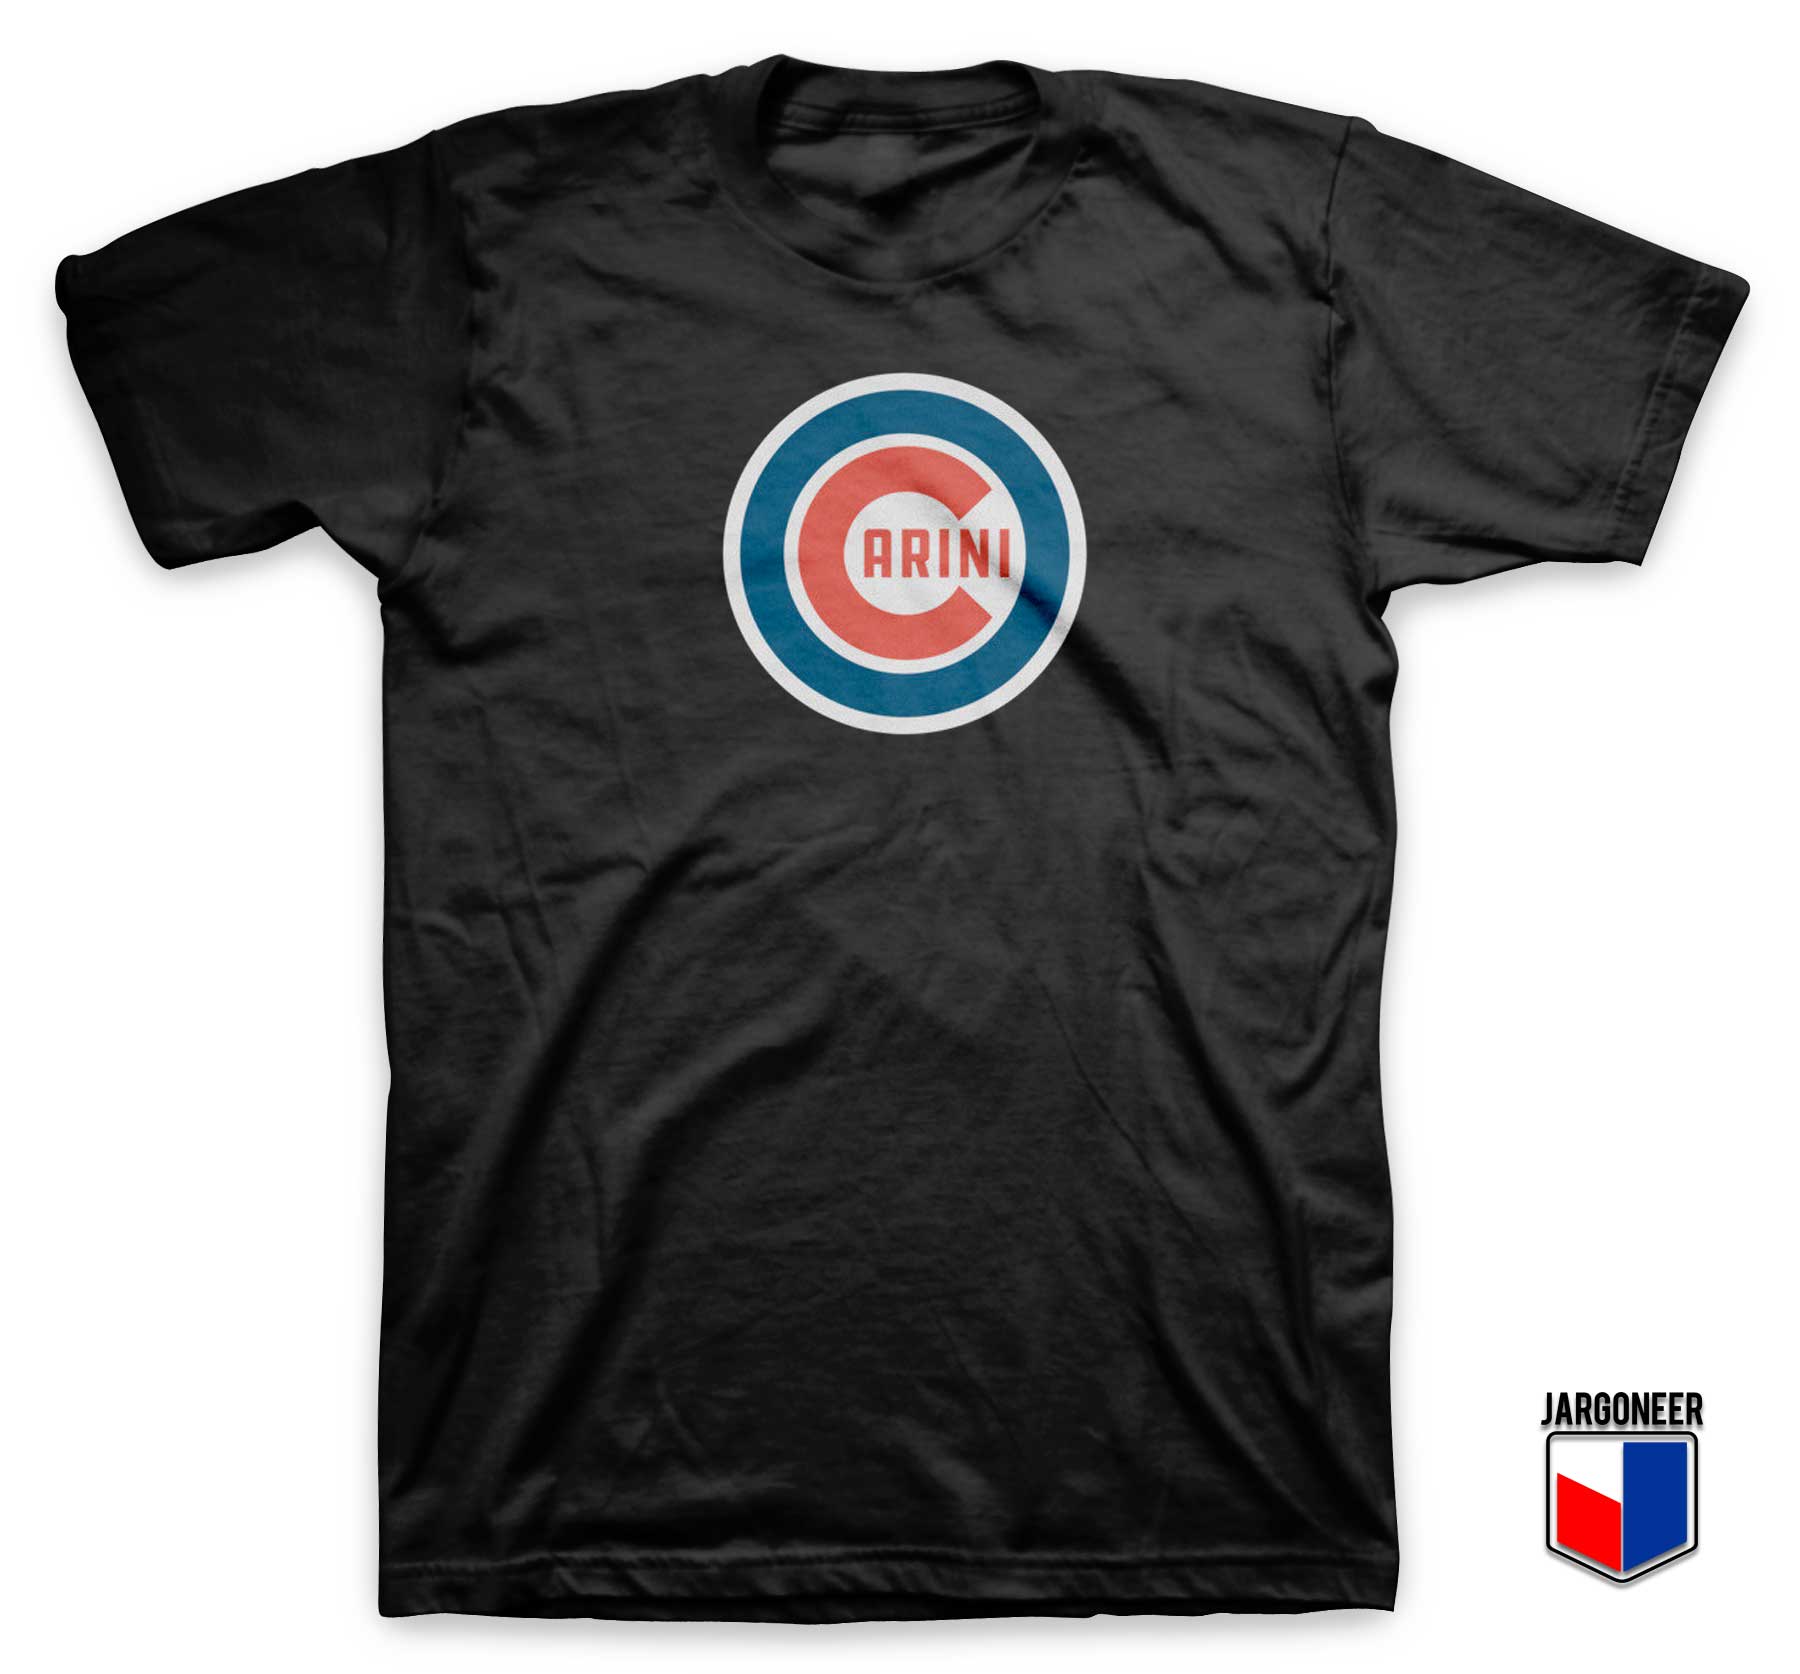 Phish Carini Logo T Shirt - Shop Unique Graphic Cool Shirt Designs